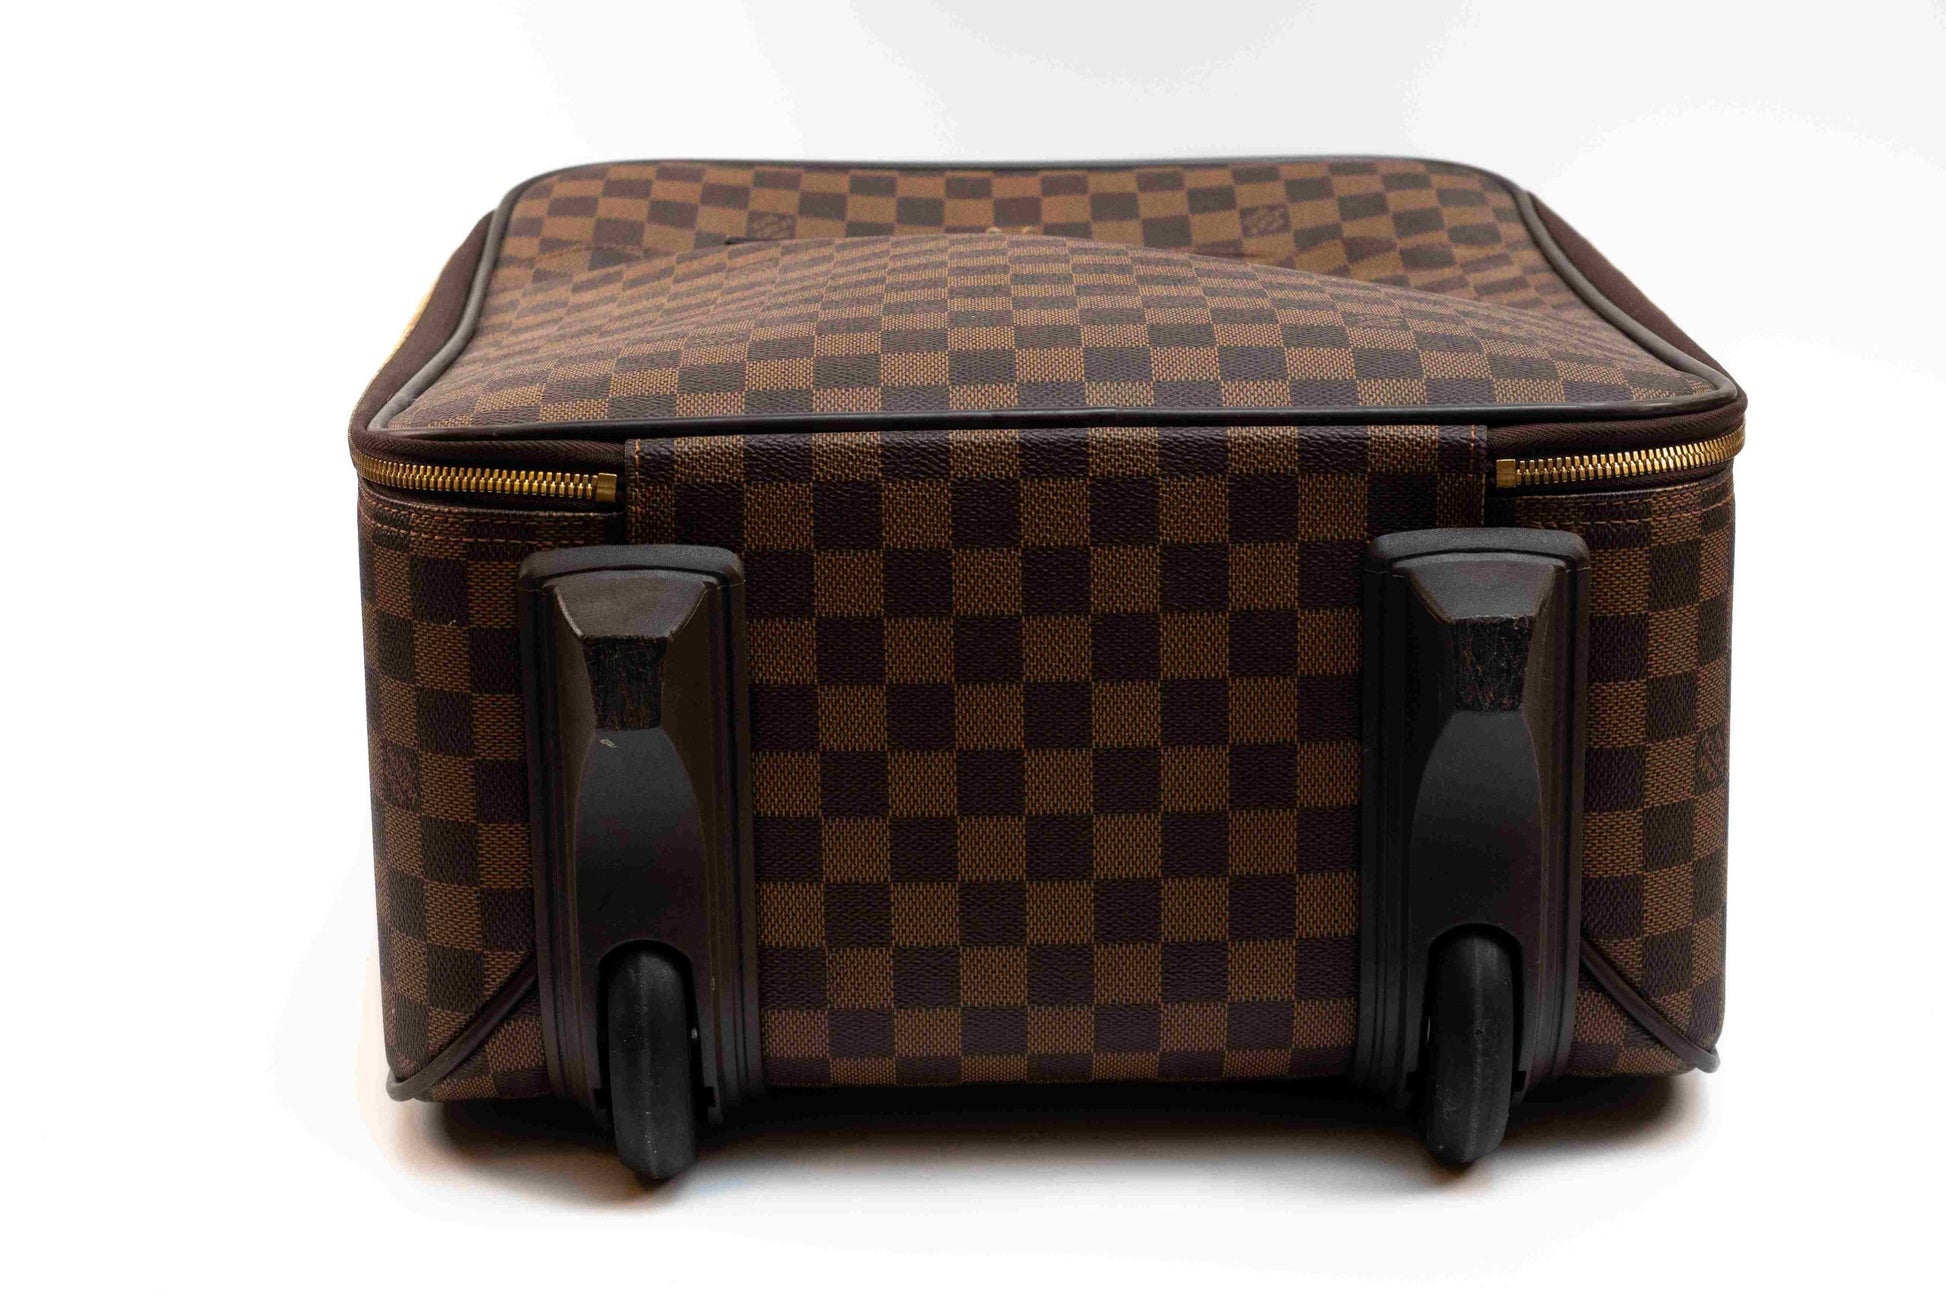 Louis Vuitton Pegase 45 Damier Ebene Canvas Suitcase